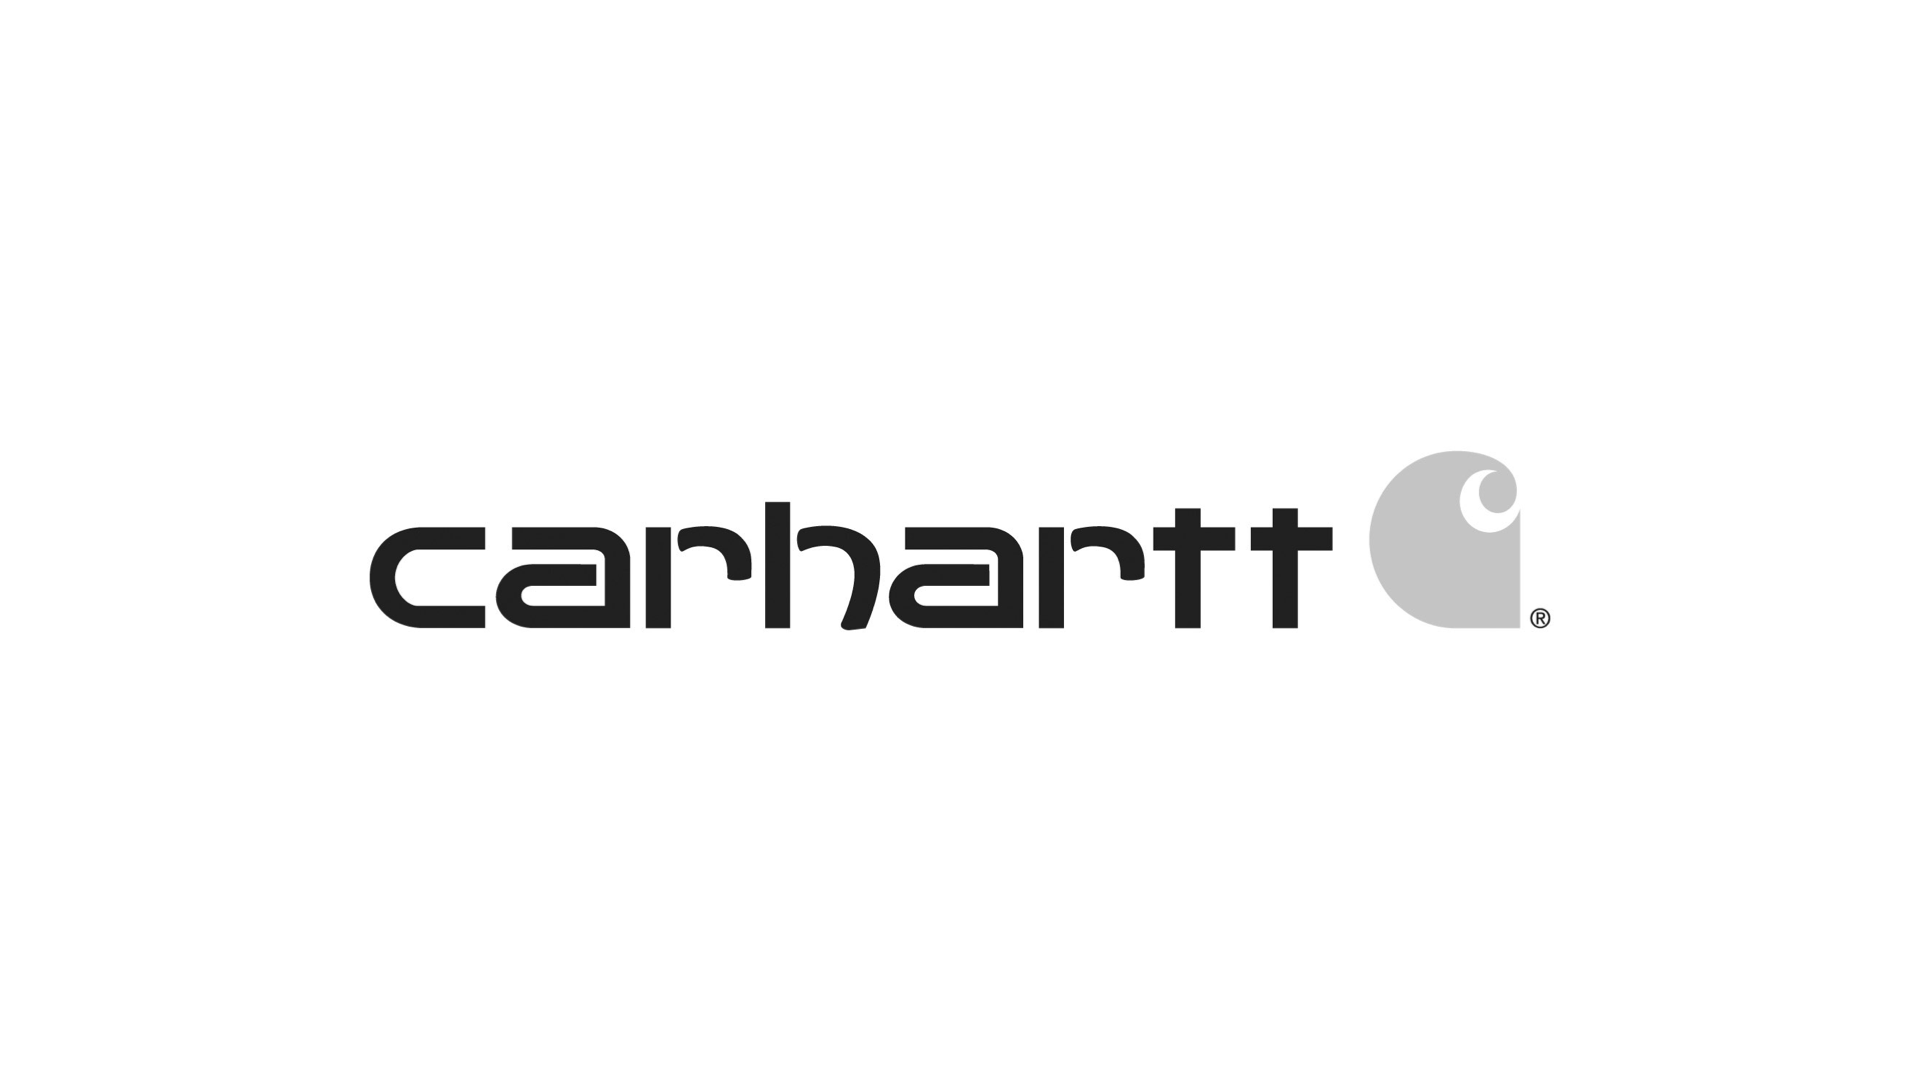 carhartt.001.png